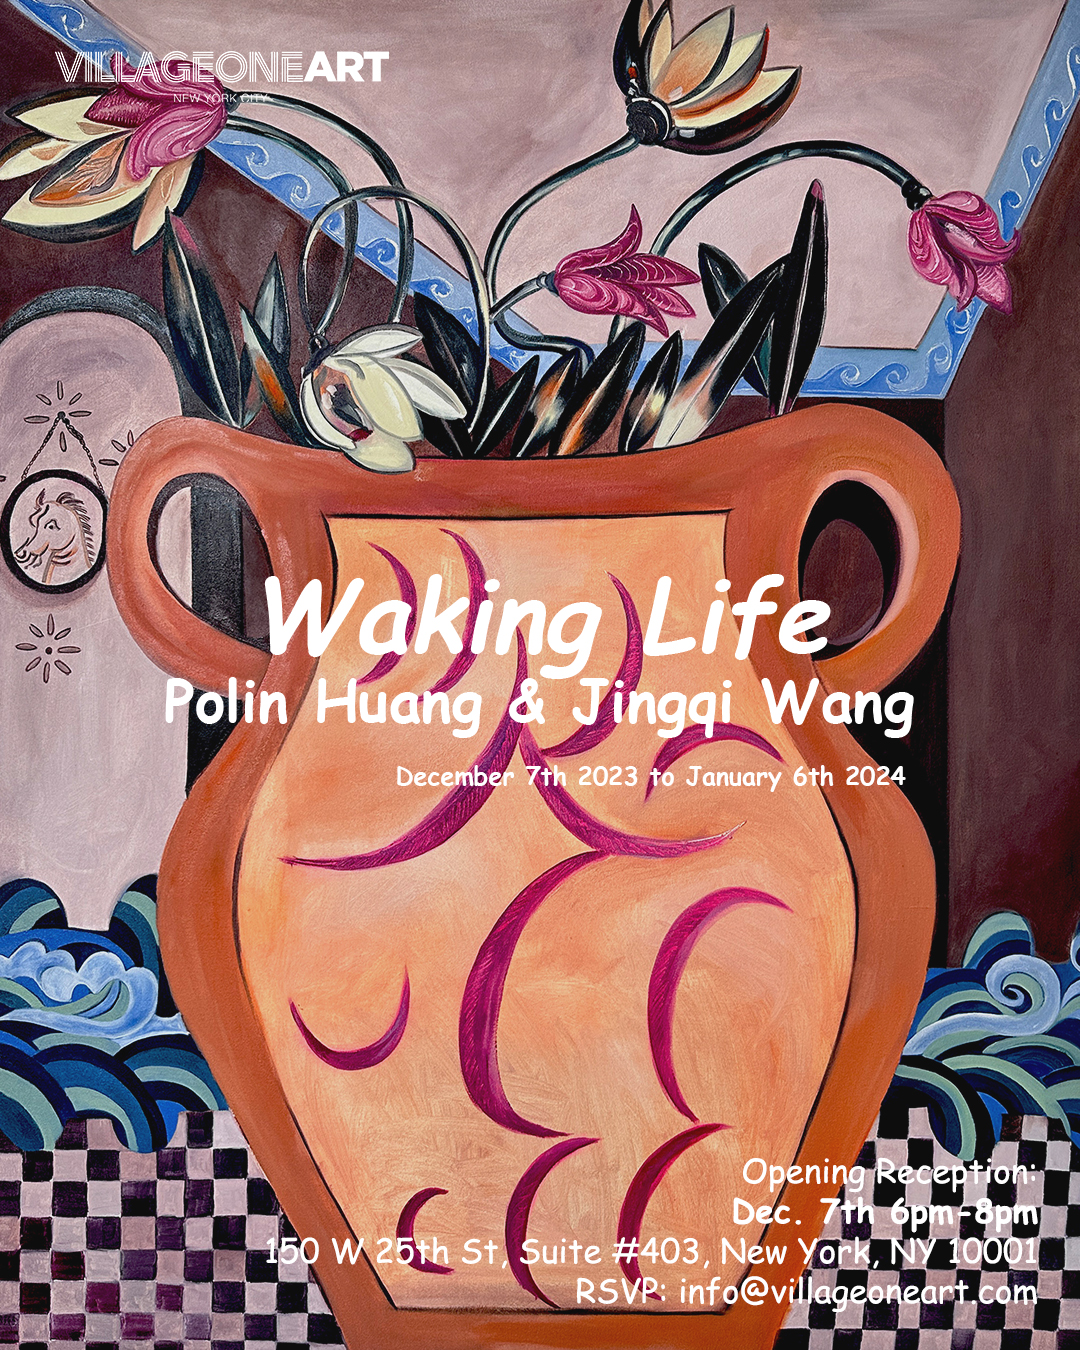 "Polin Huang & Jingqi Wang: Waking Life" at VillageOneArt